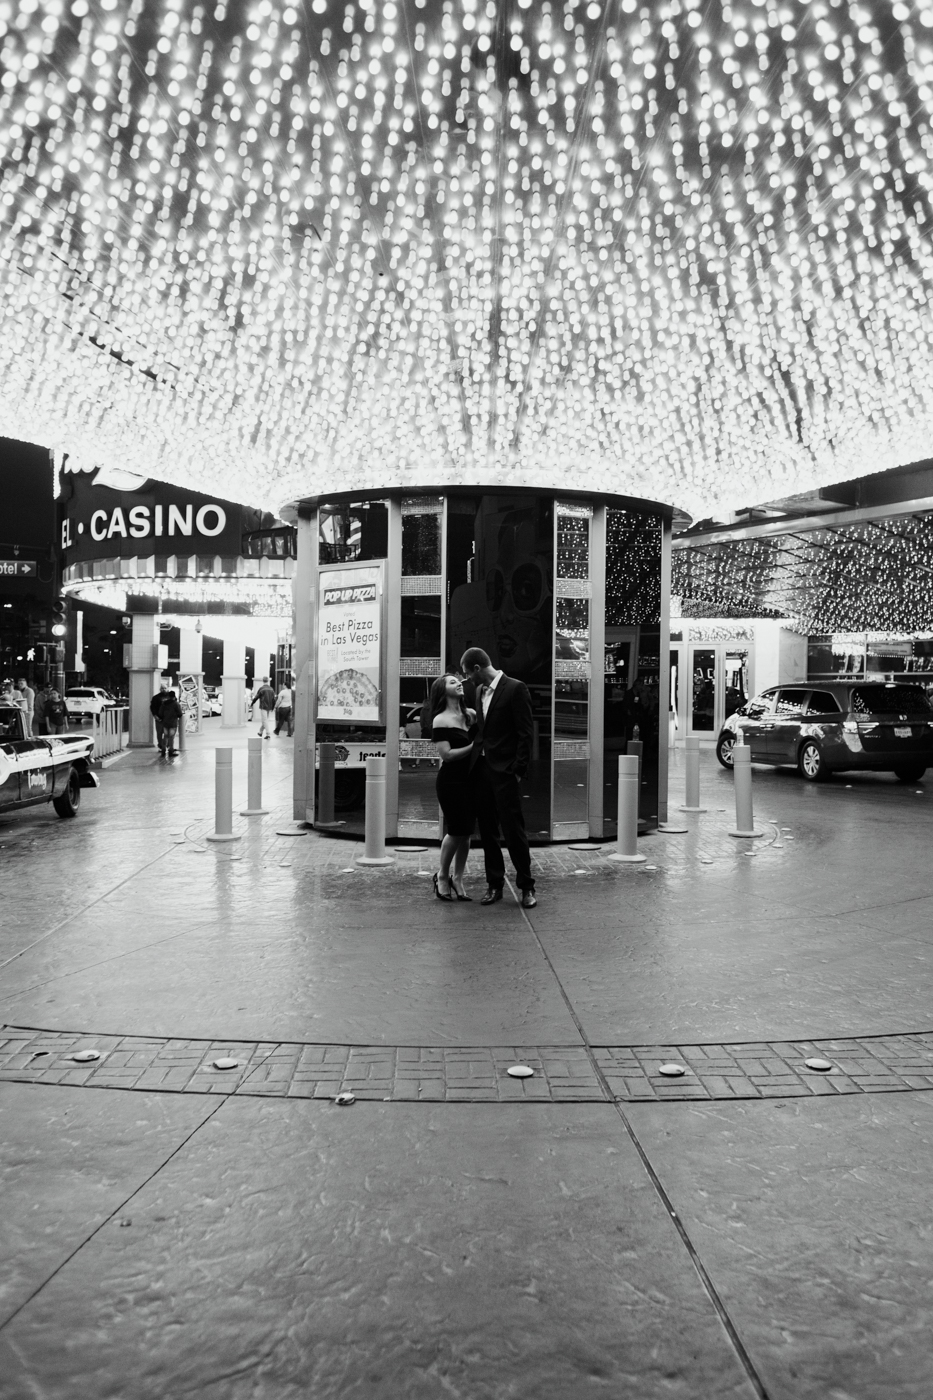 Engagement photograph at The Plaza Las Vegas